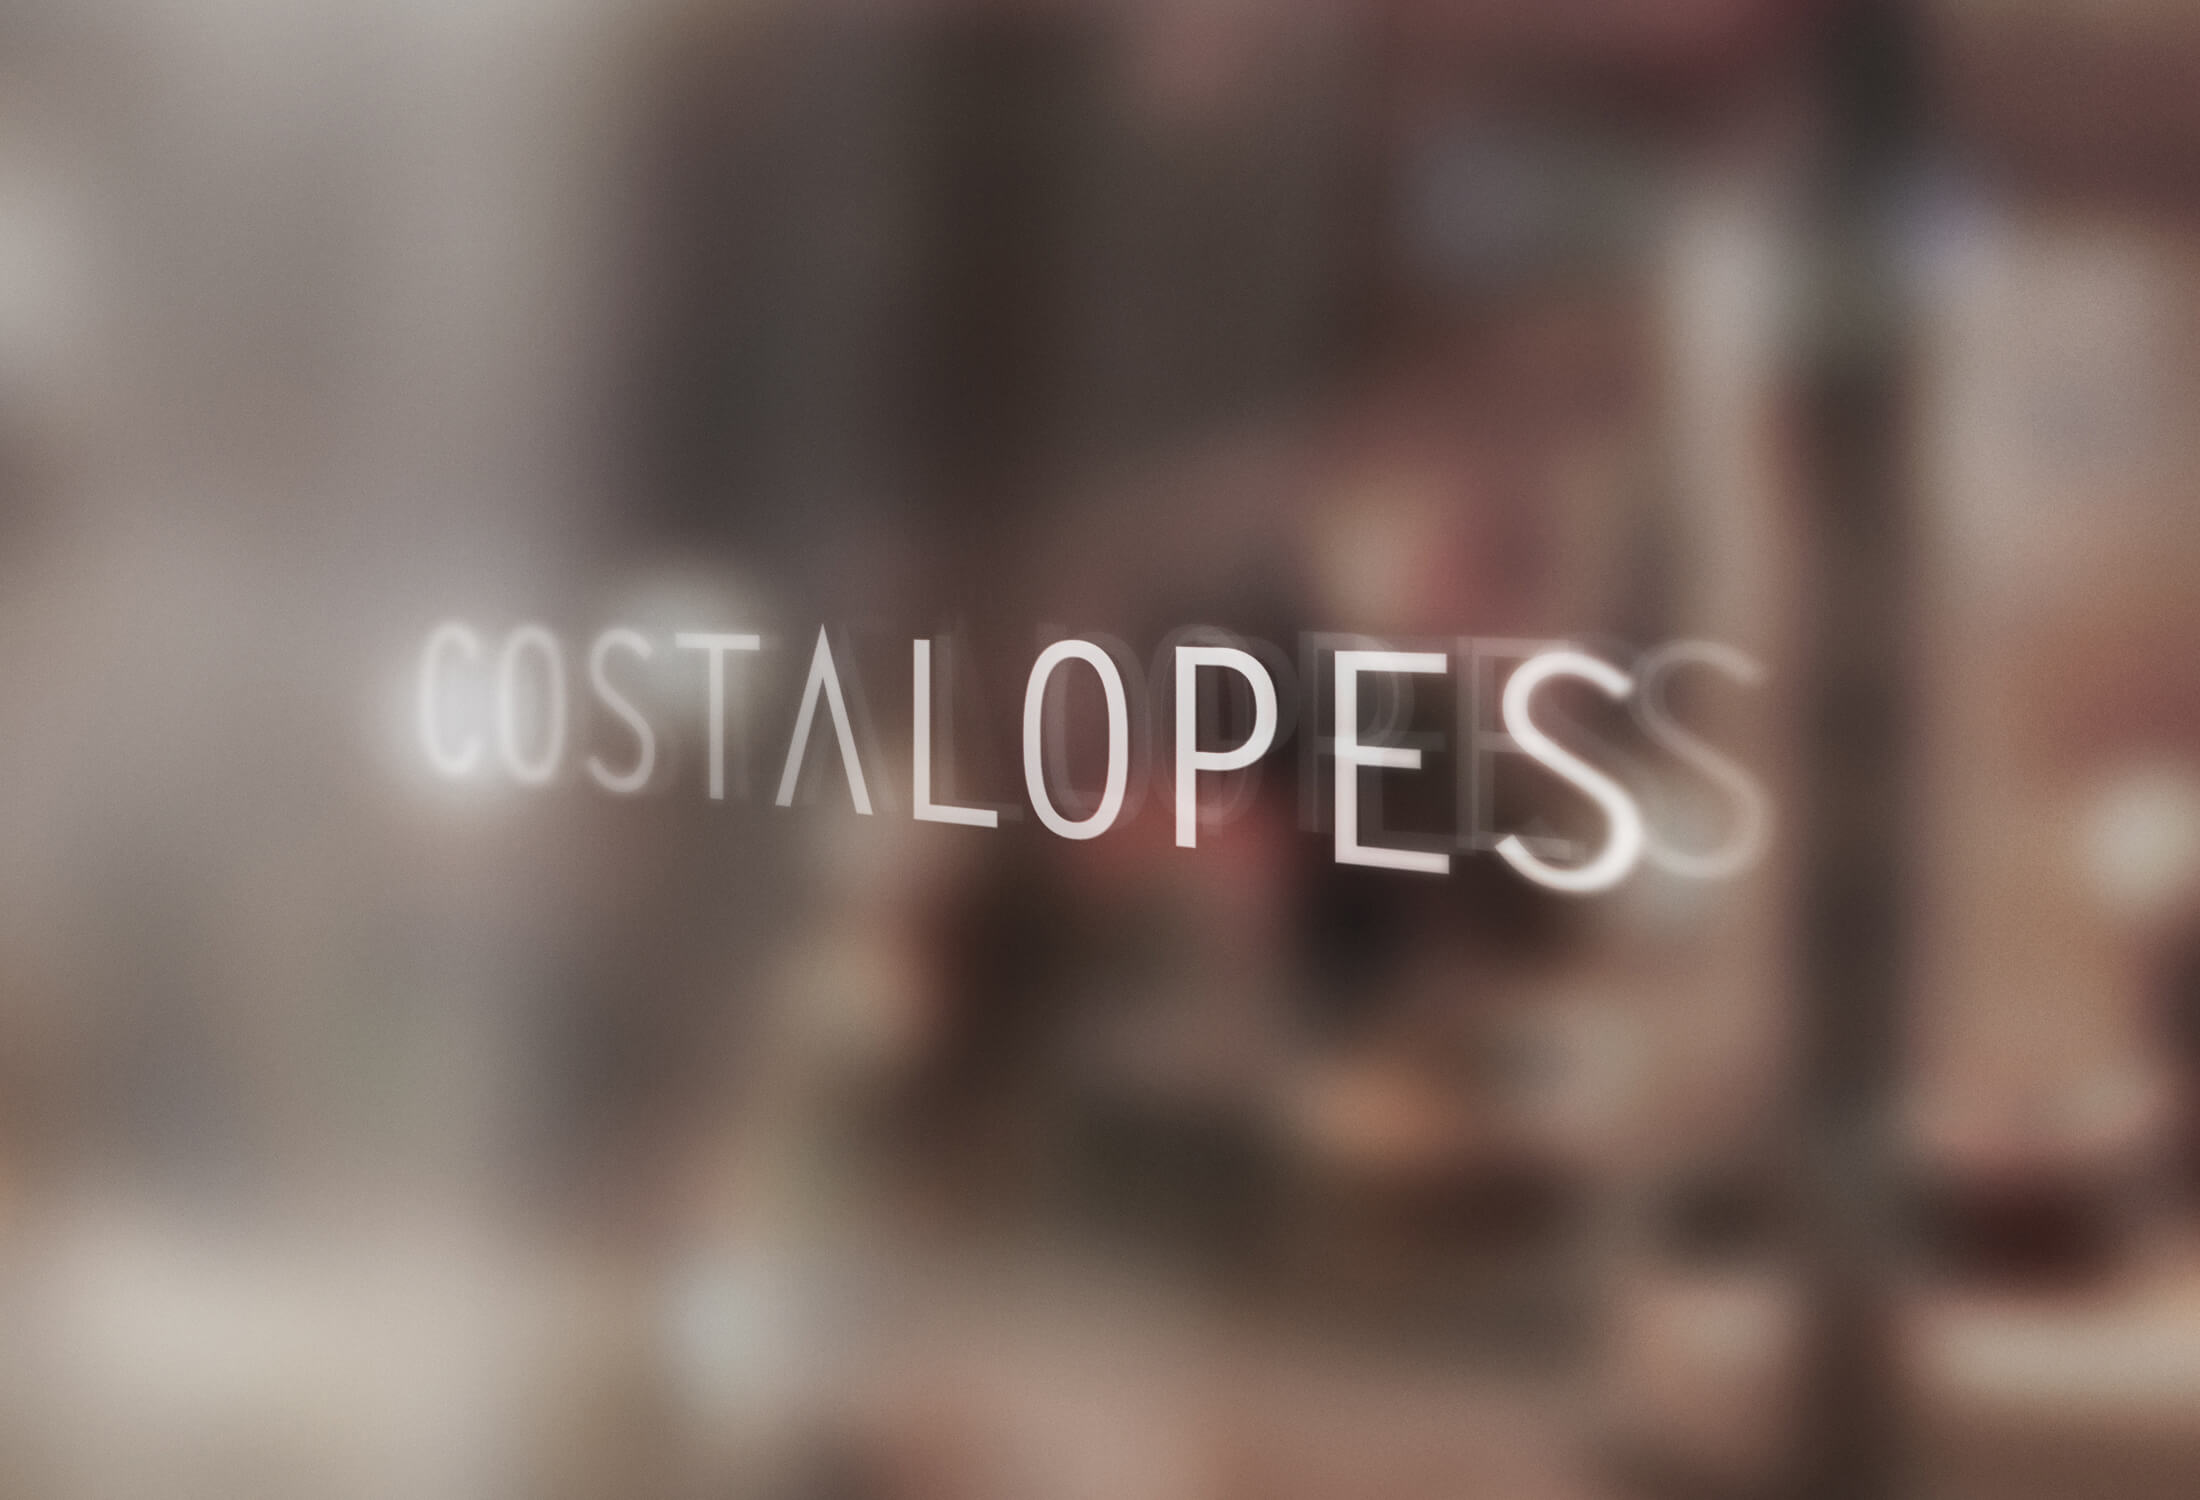 Costa Lopes branding